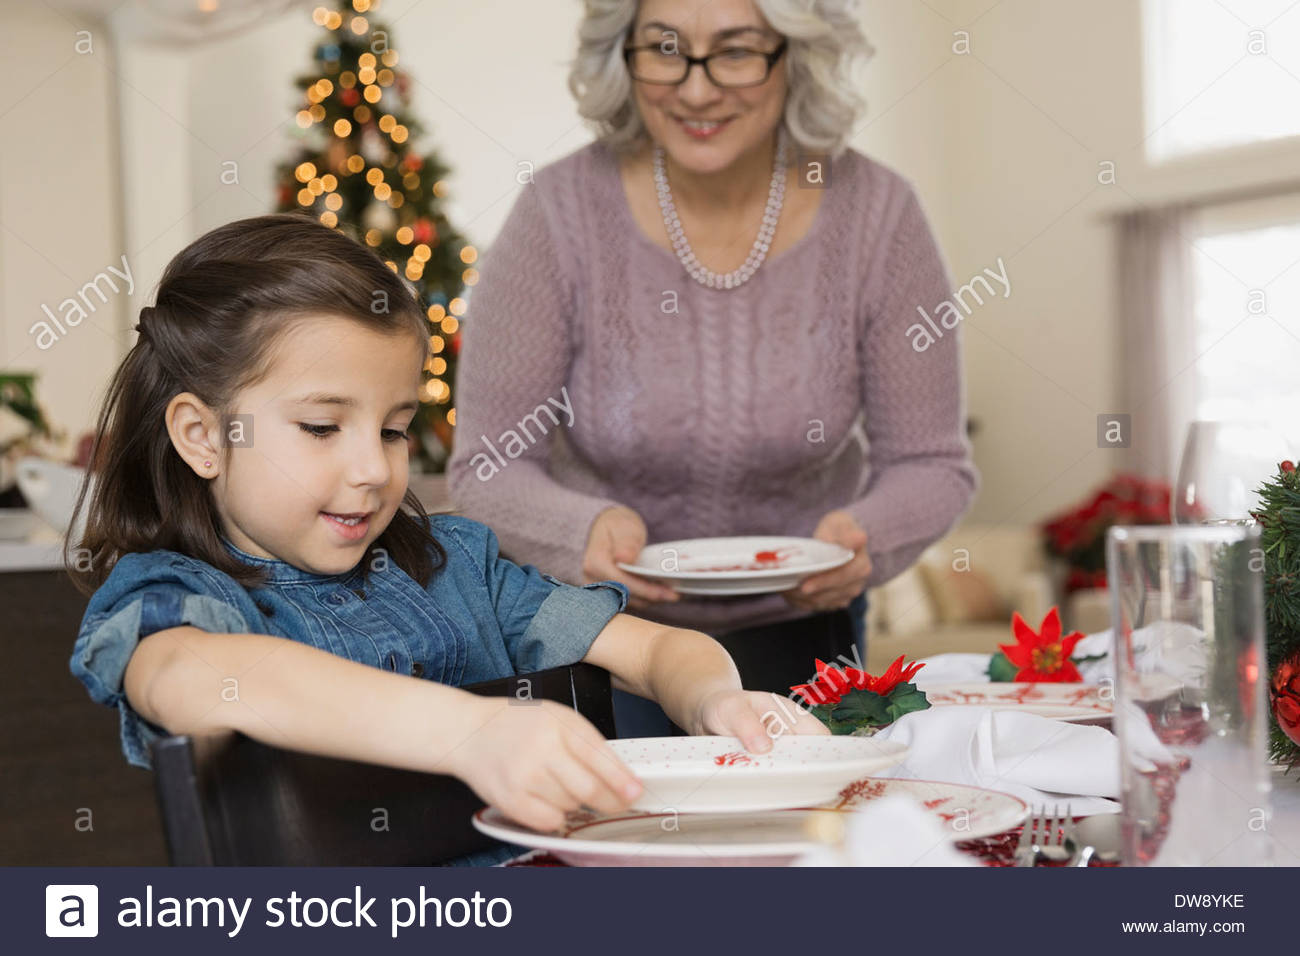 Grandmother and granddaughter setting table at Christmas Stock Photo